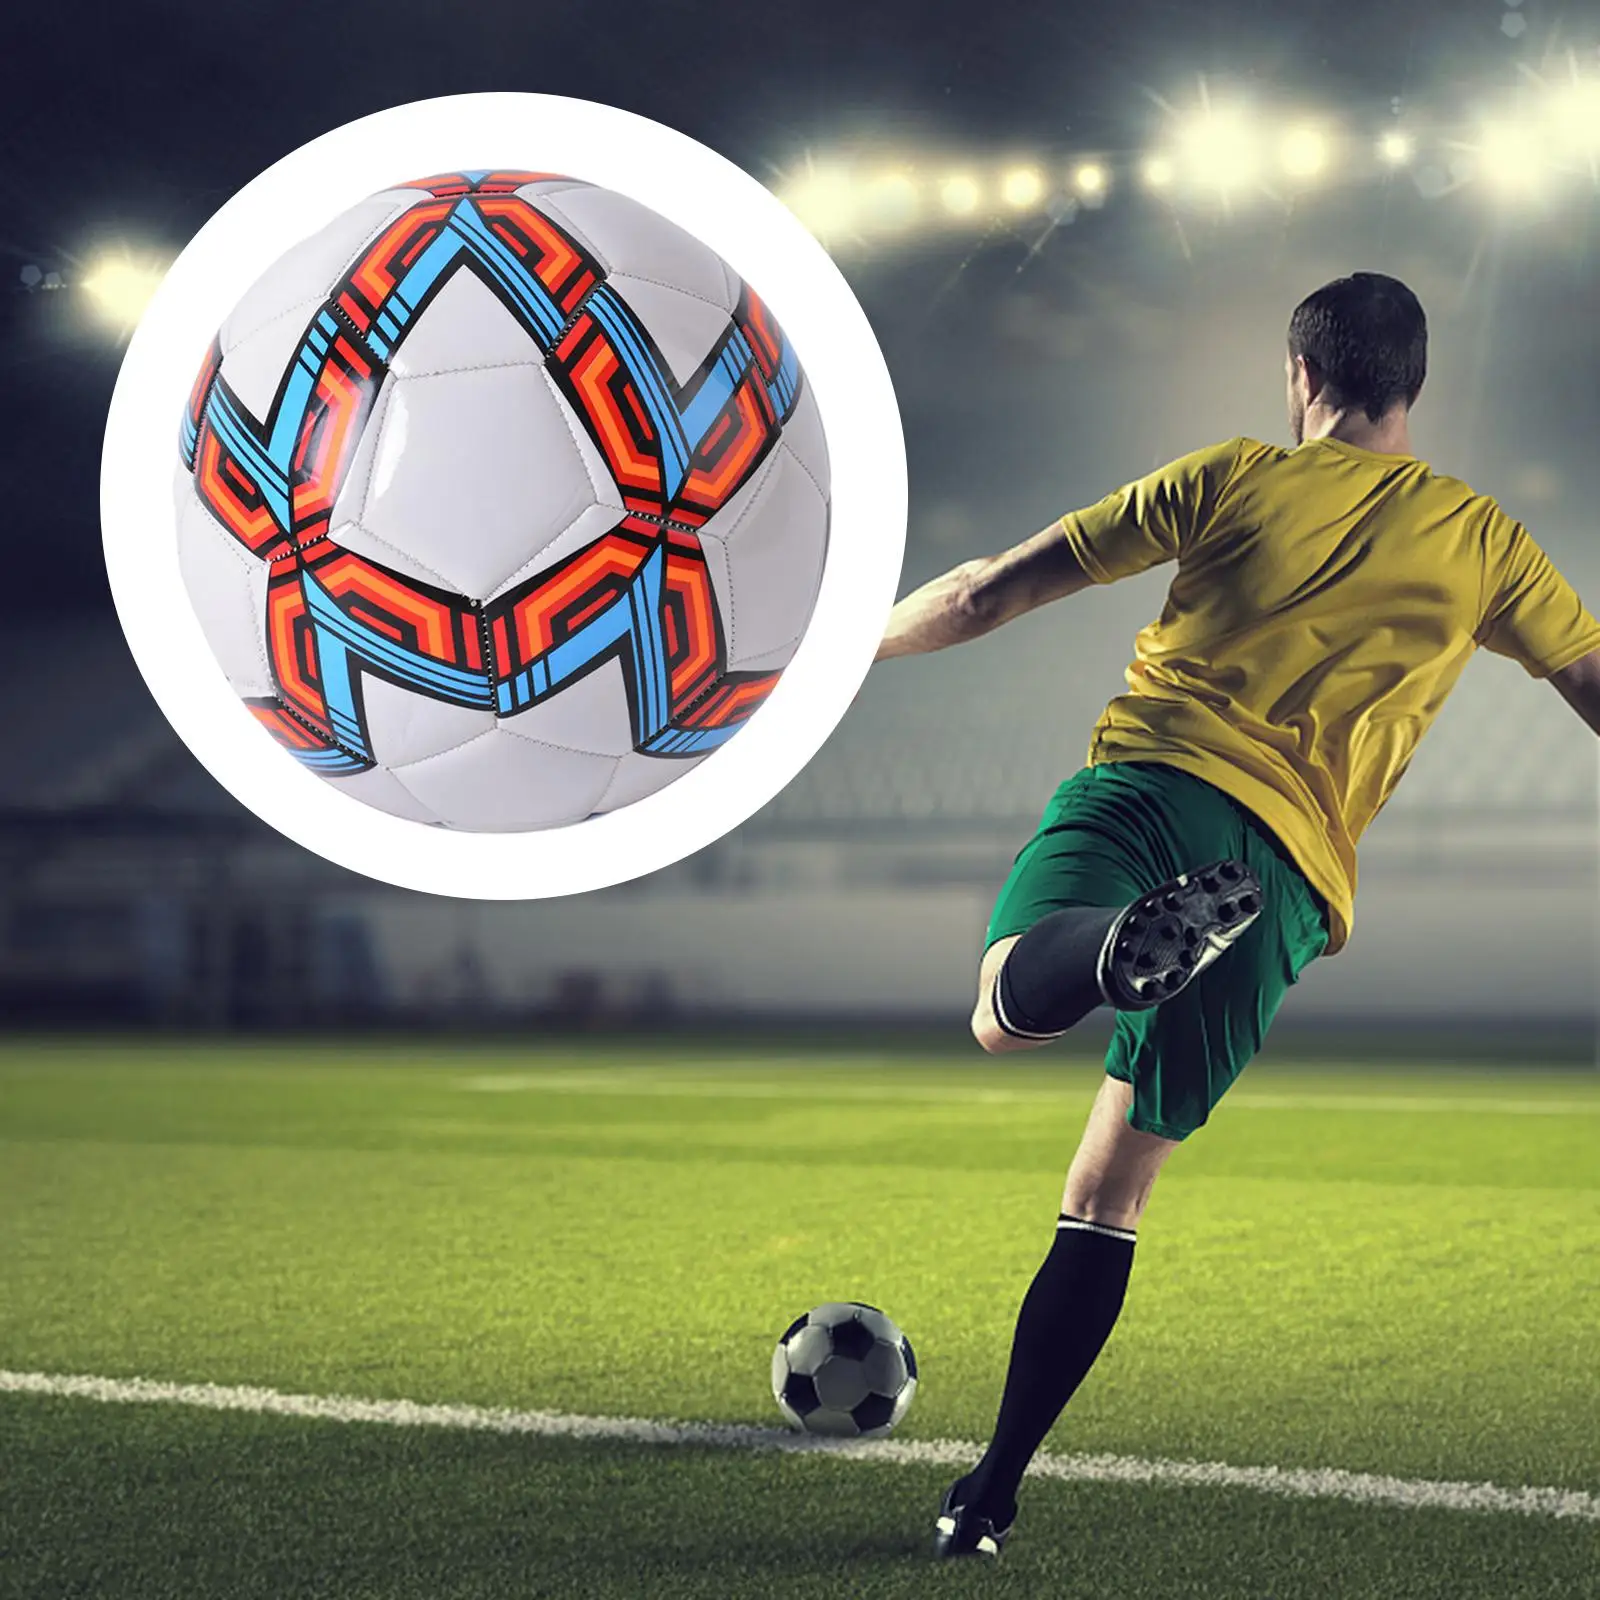 48 X JOB LOT BULK size 5 PVC Soccer Ball Football Outdoor clearance full size 